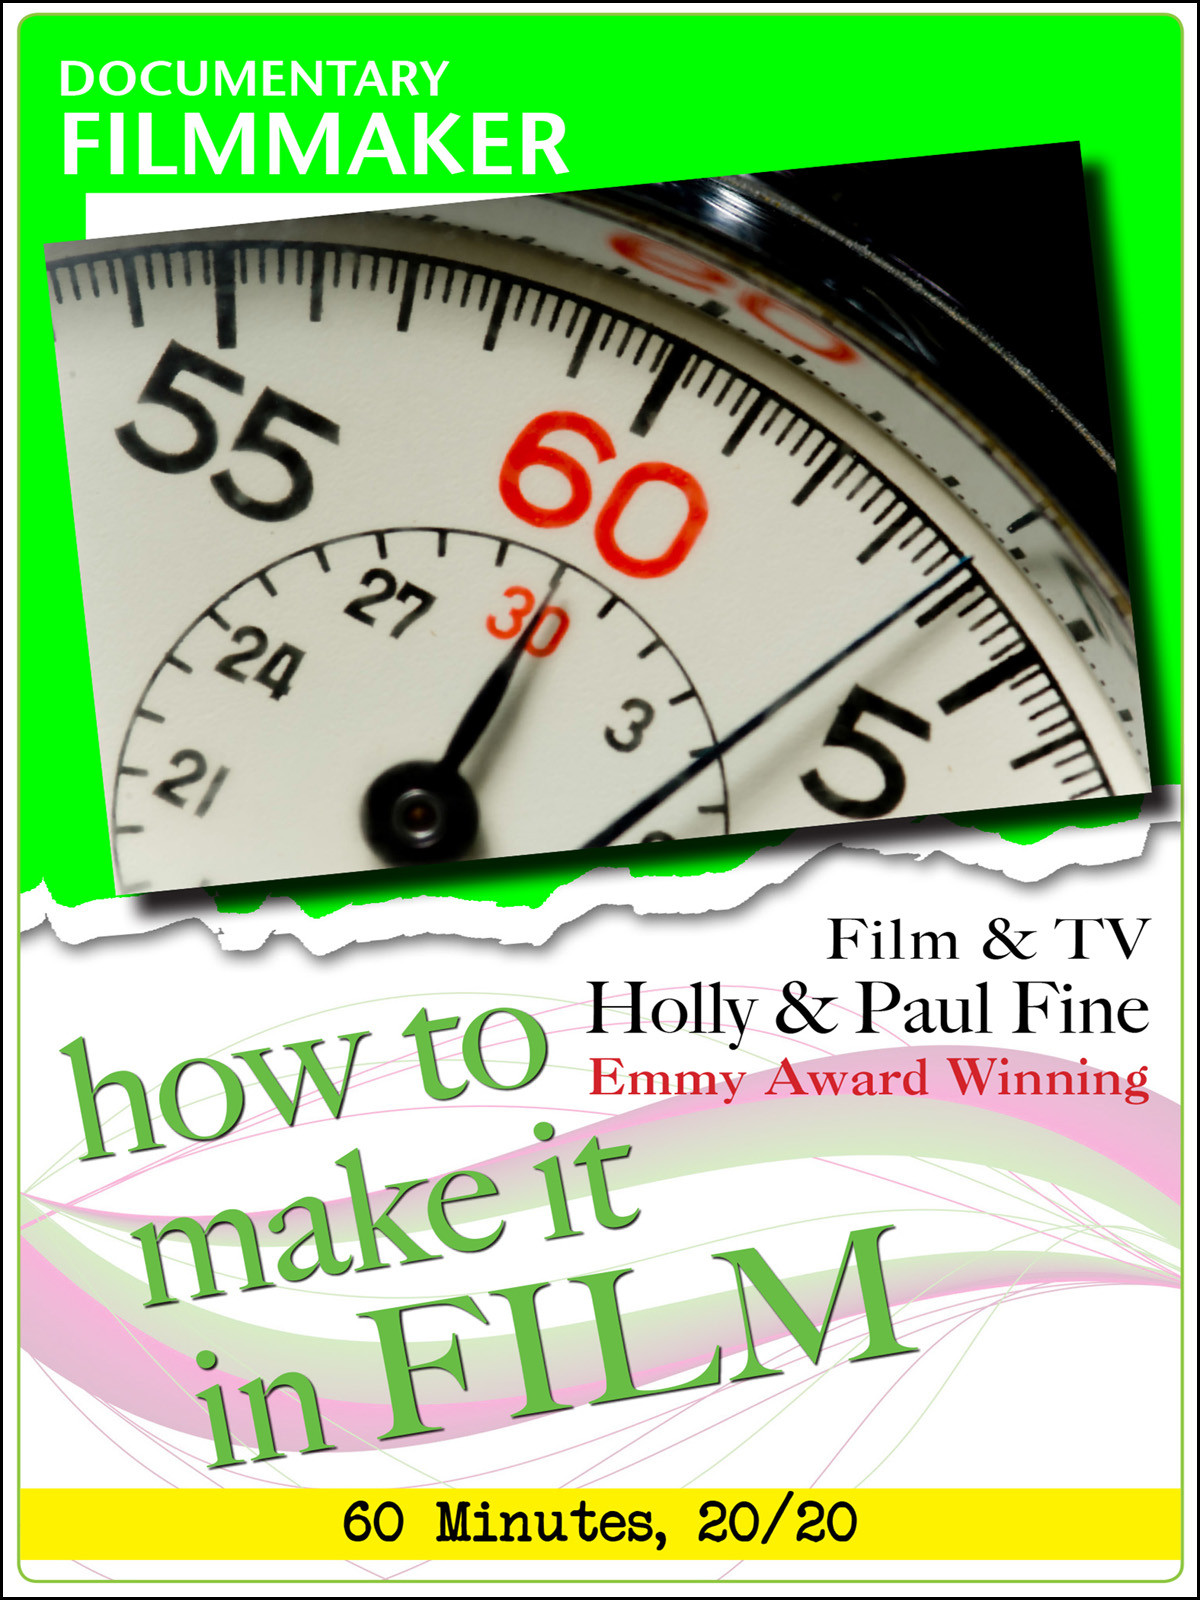 F2866 - Documentary Filmmaker Film & TV Holly & Paul Fine